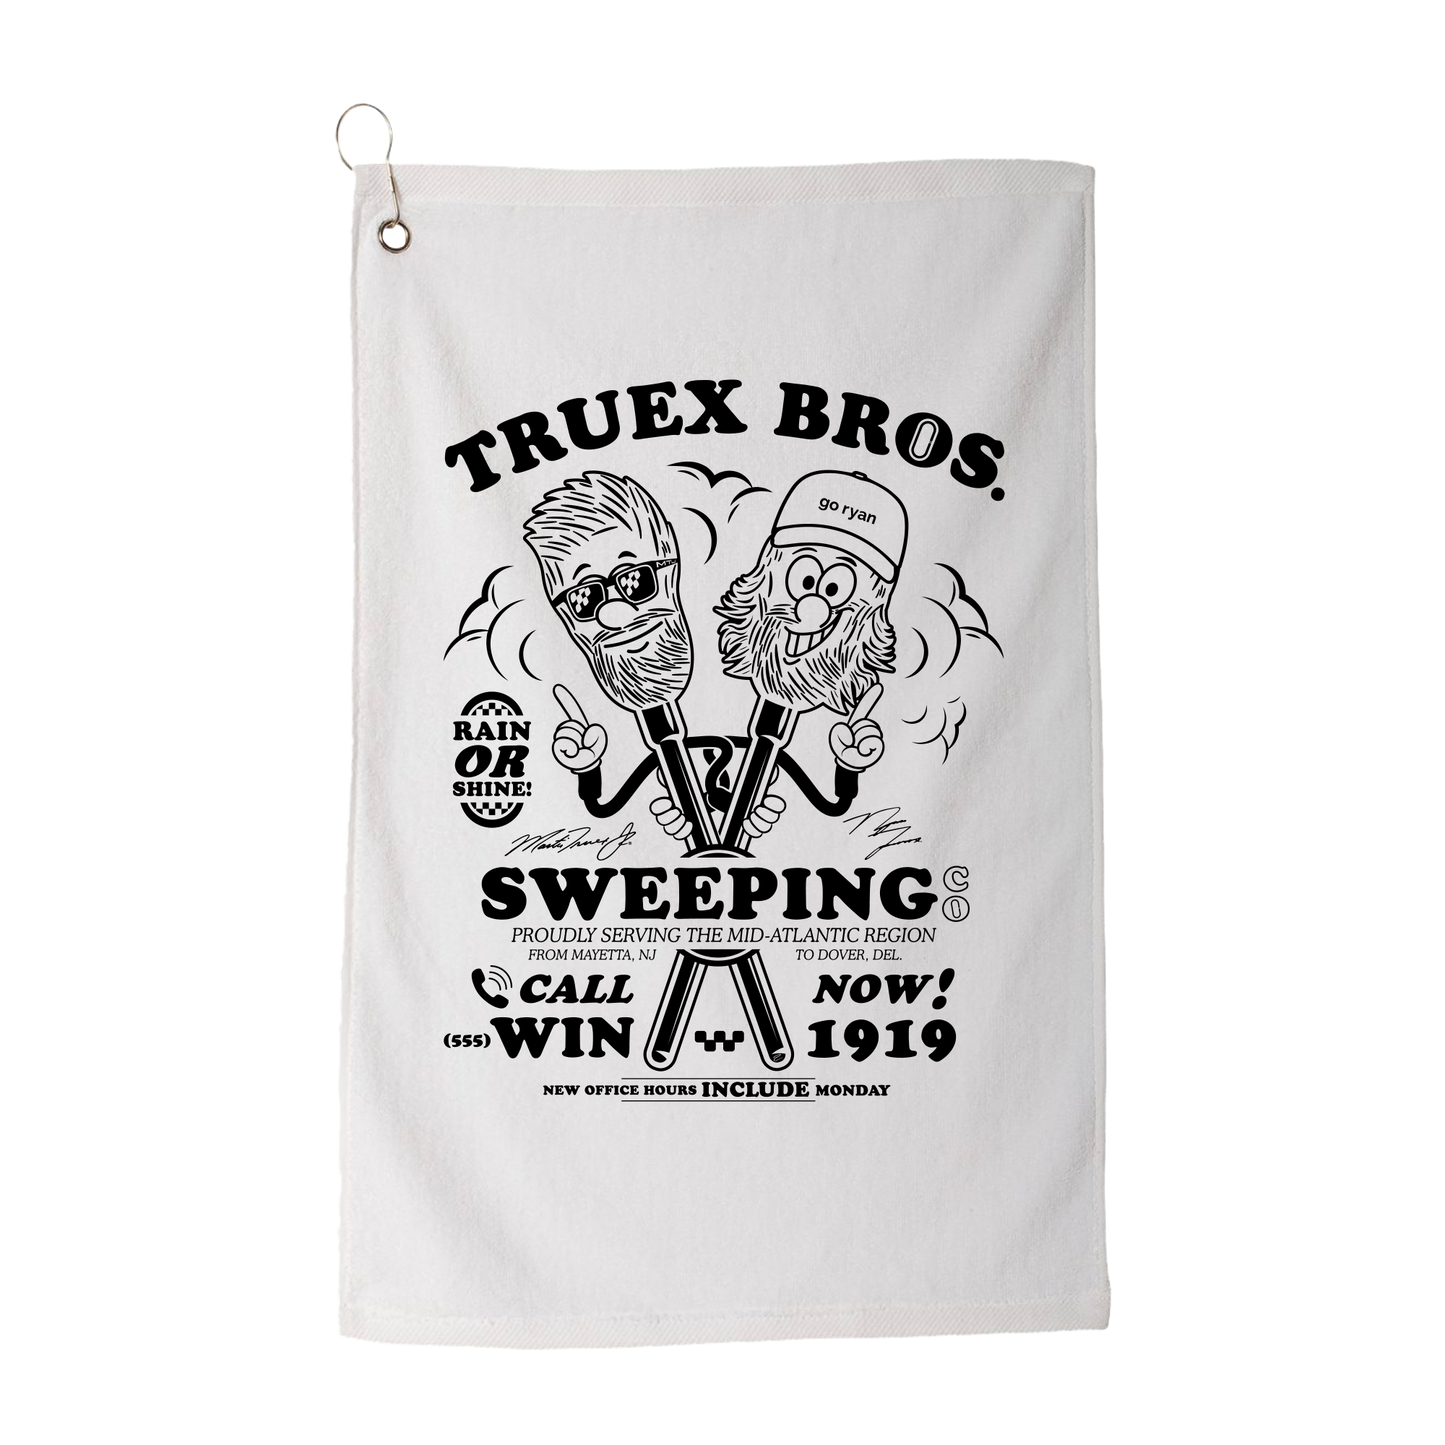 Truex Brothers Sweeping Co. Towel